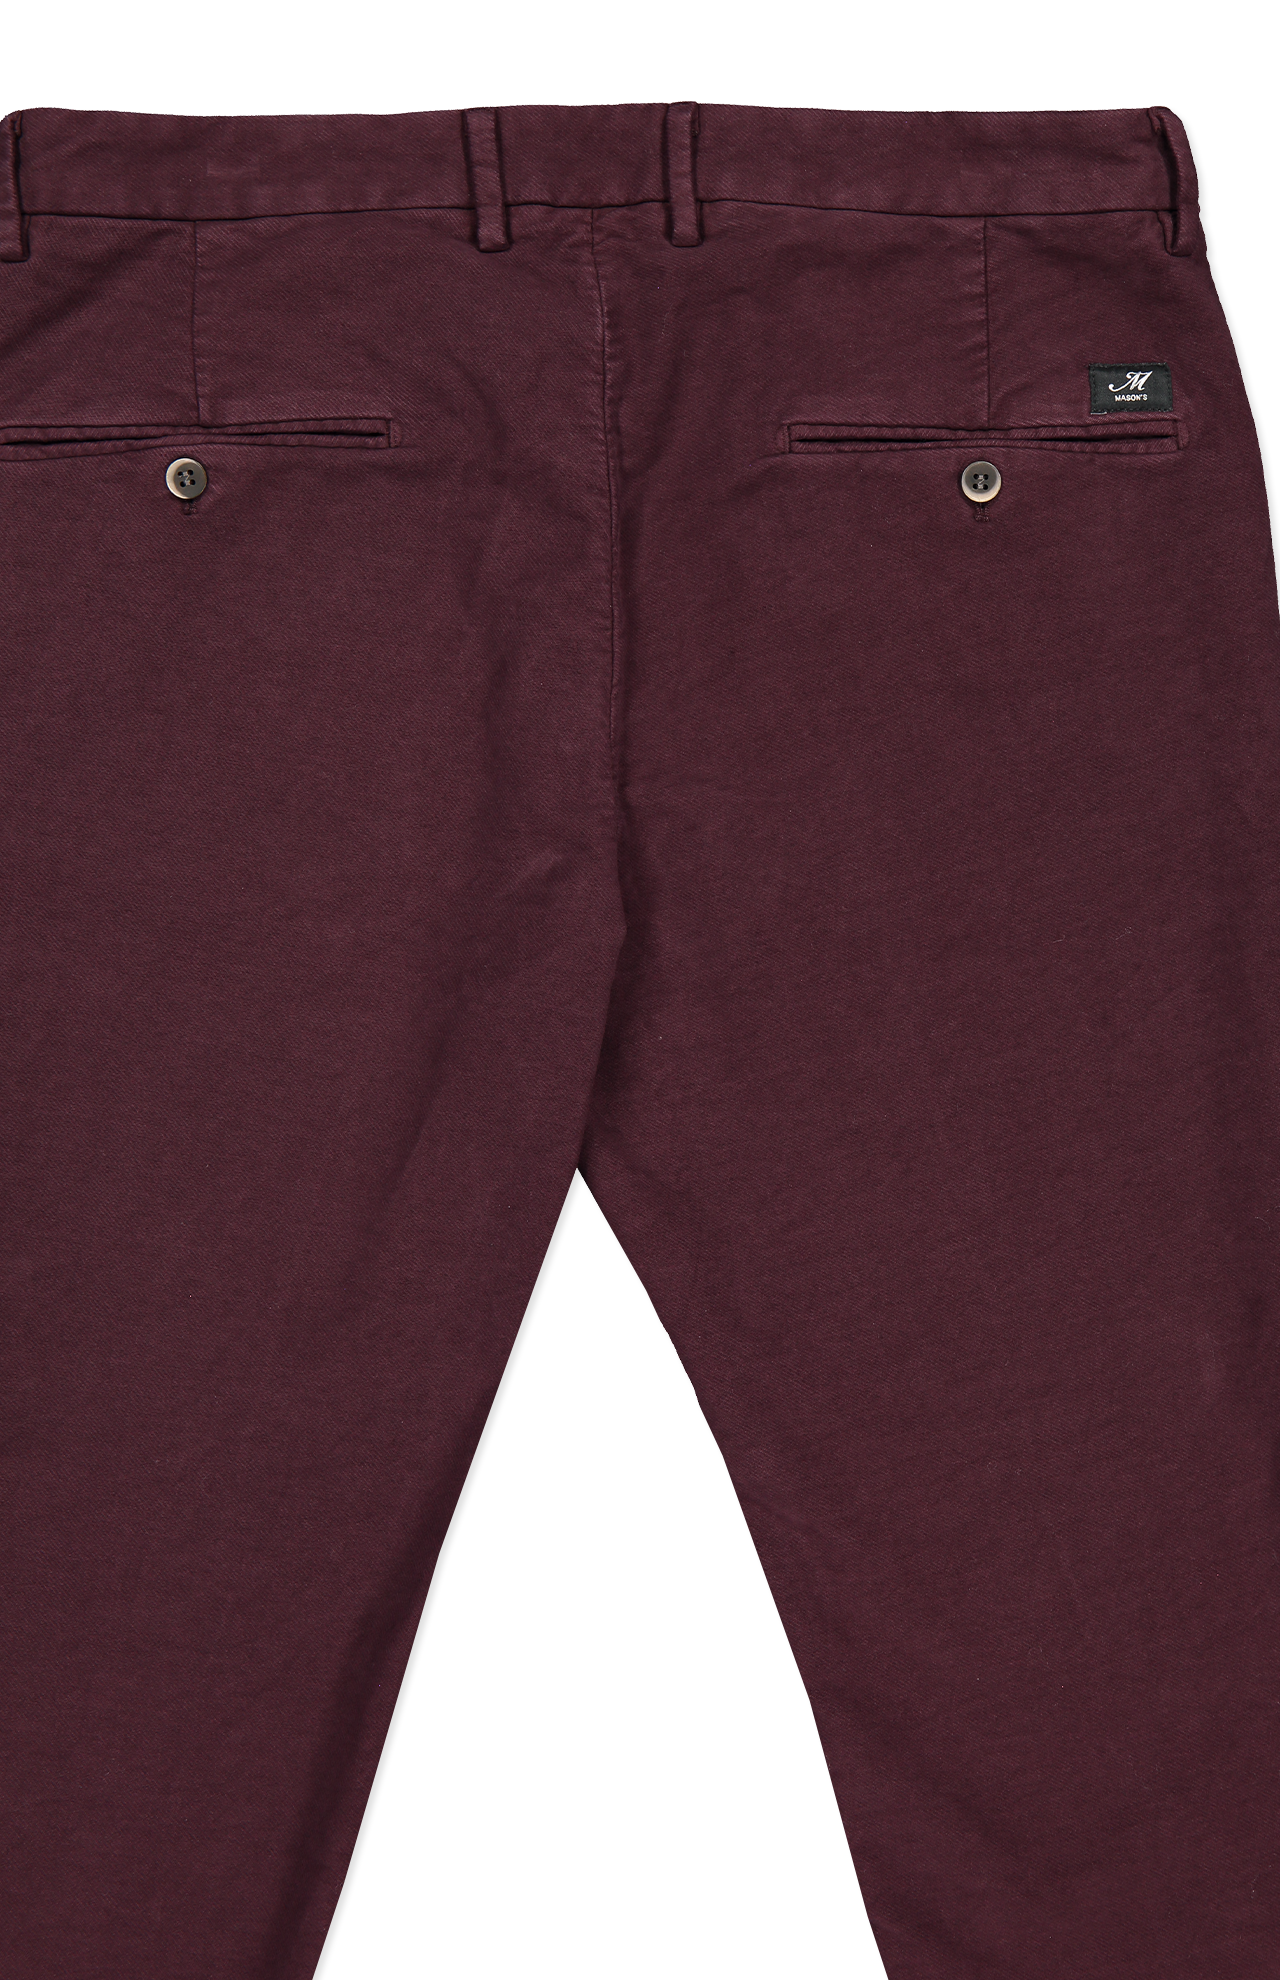 Mason's Torino Style Moleskin Chino Pant in Plum Back Detail Image (6955219976307)